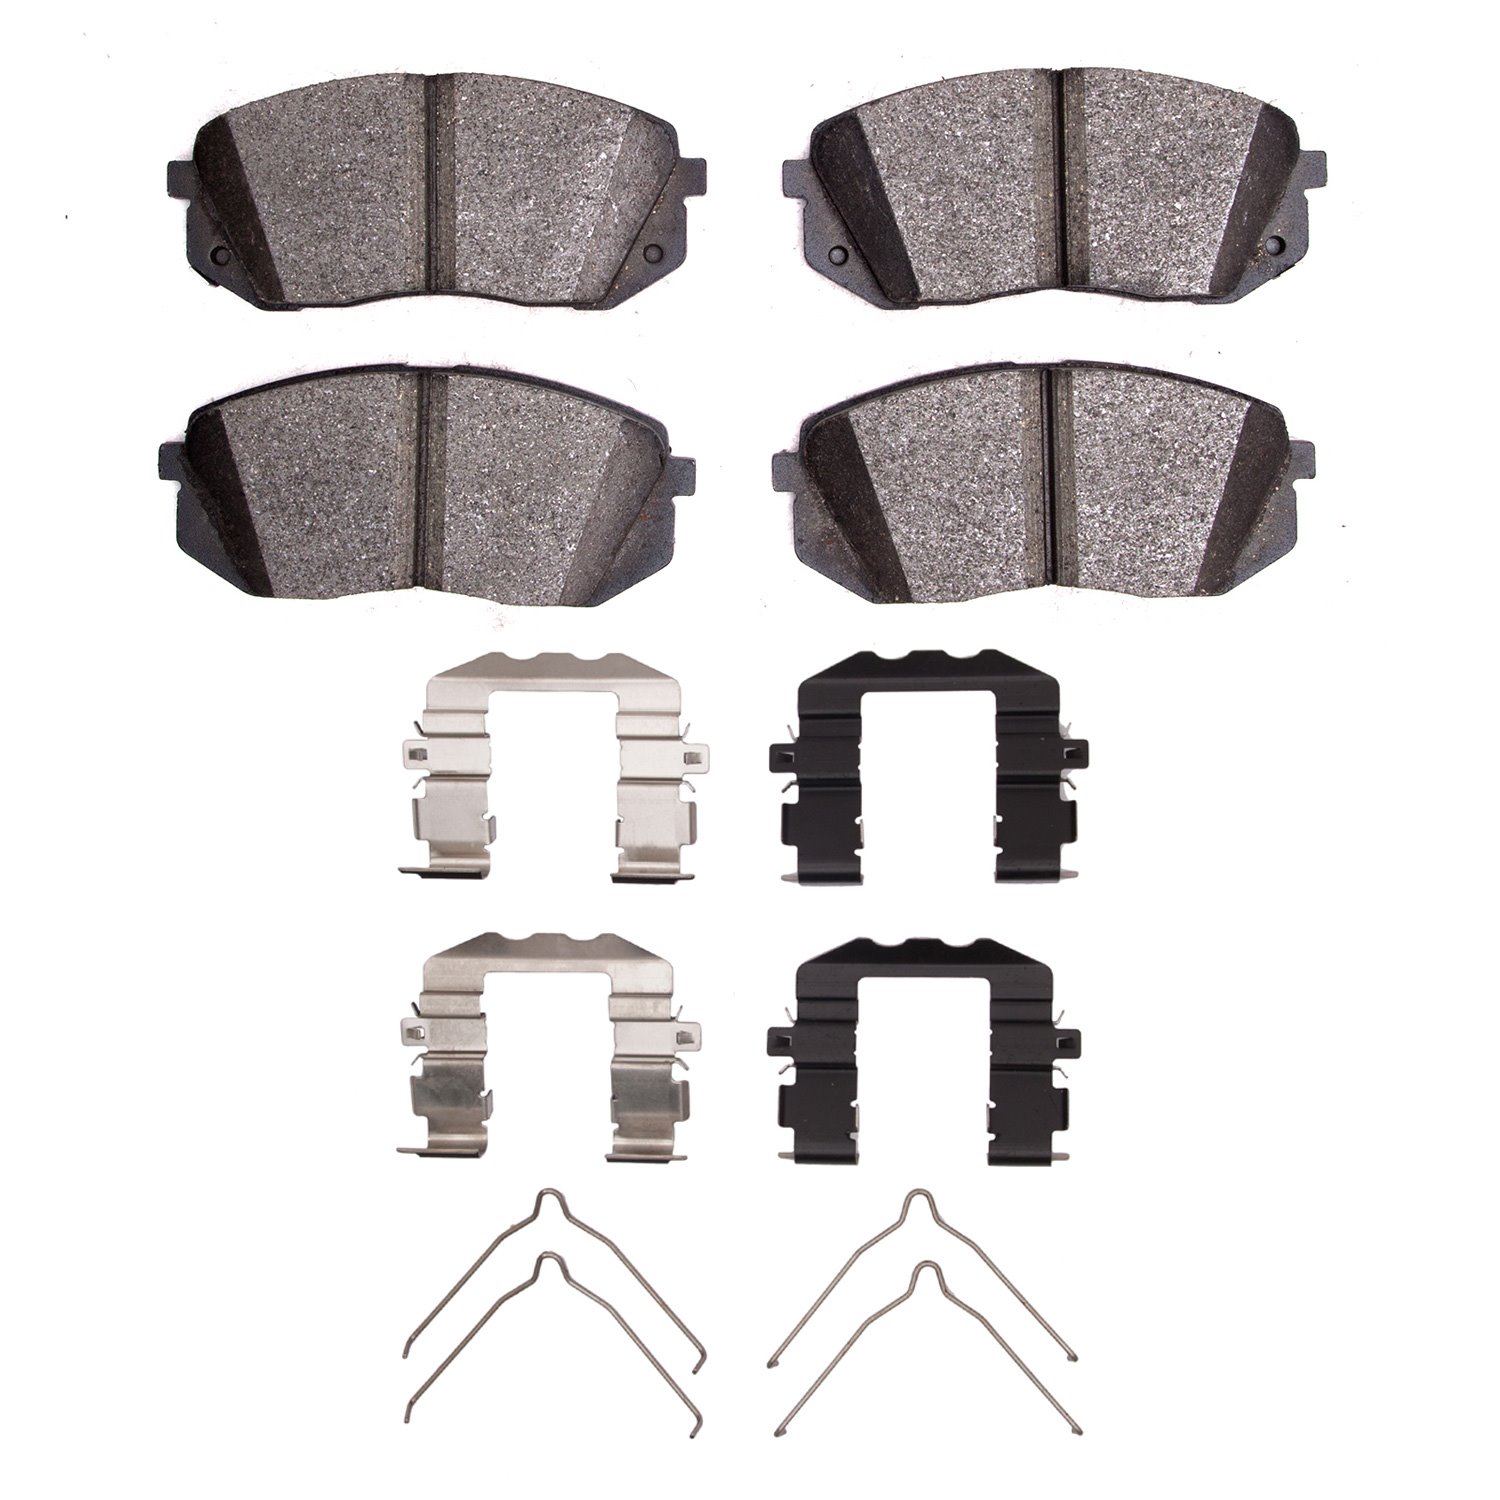 1551-1826-01 5000 Advanced Ceramic Brake Pads & Hardware Kit, Fits Select Kia/Hyundai/Genesis, Position: Front